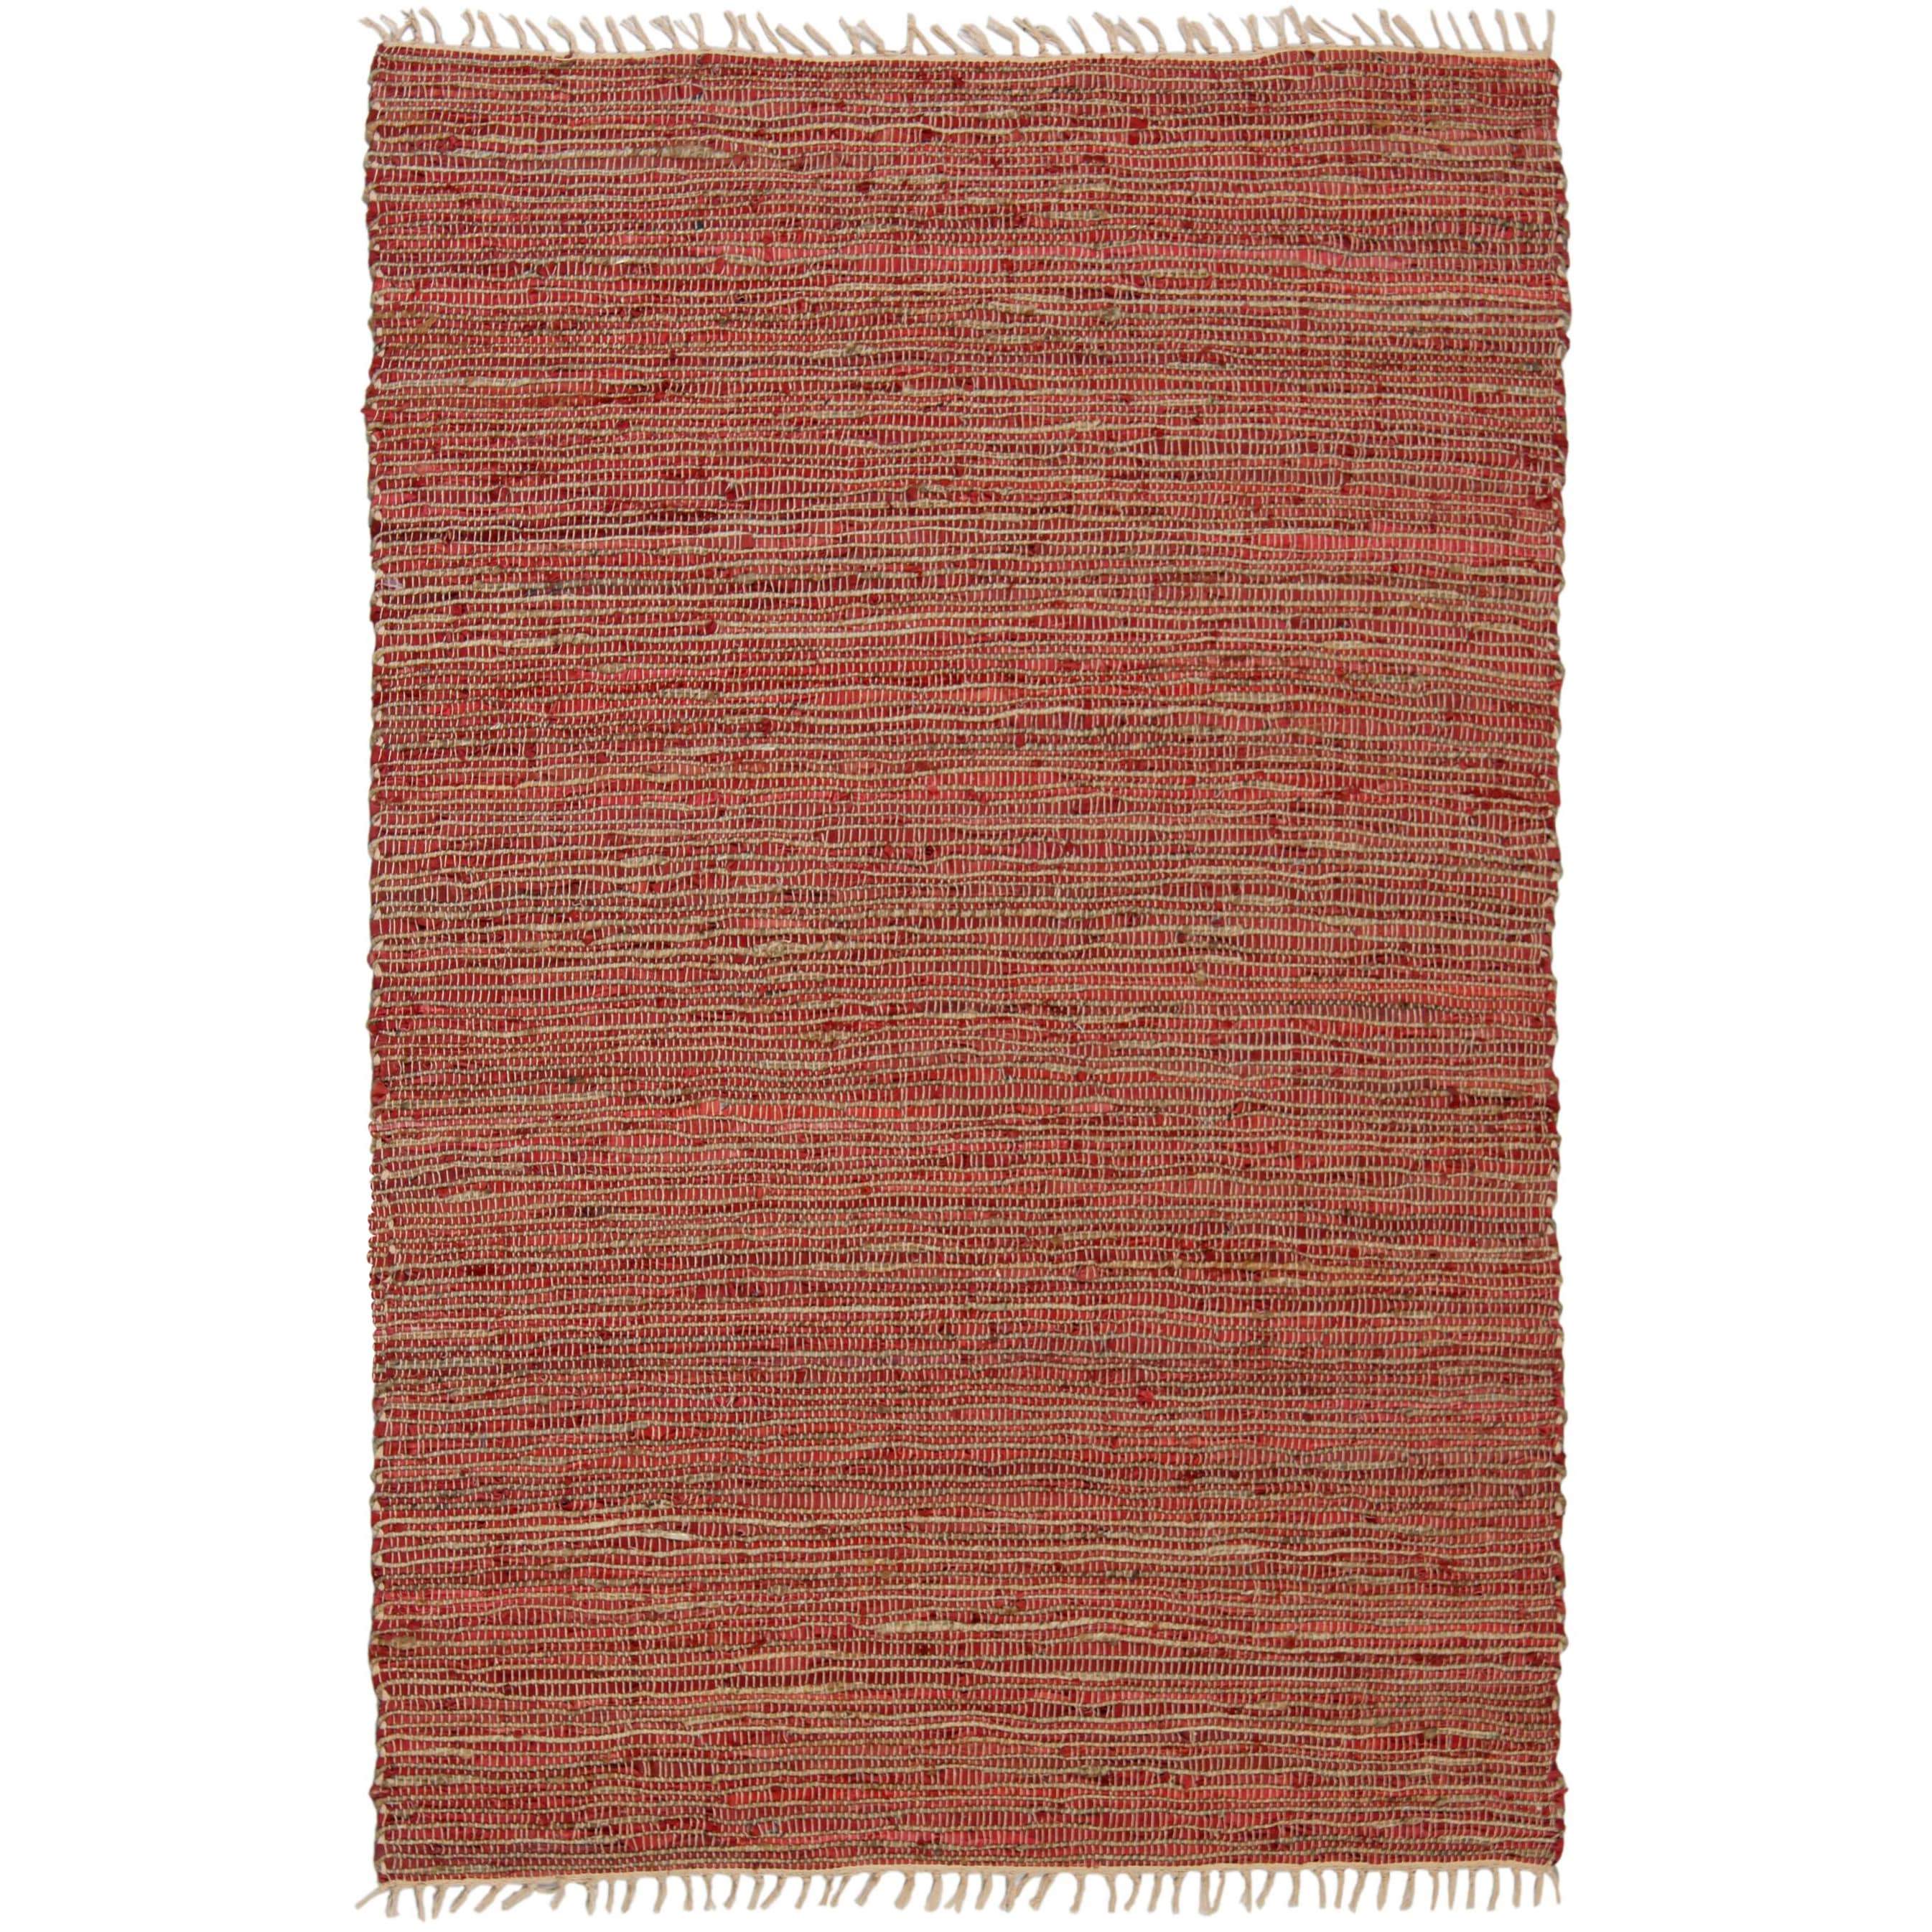 Hand woven Matador Copper Leather/ Hemp Rug (8 X 10)